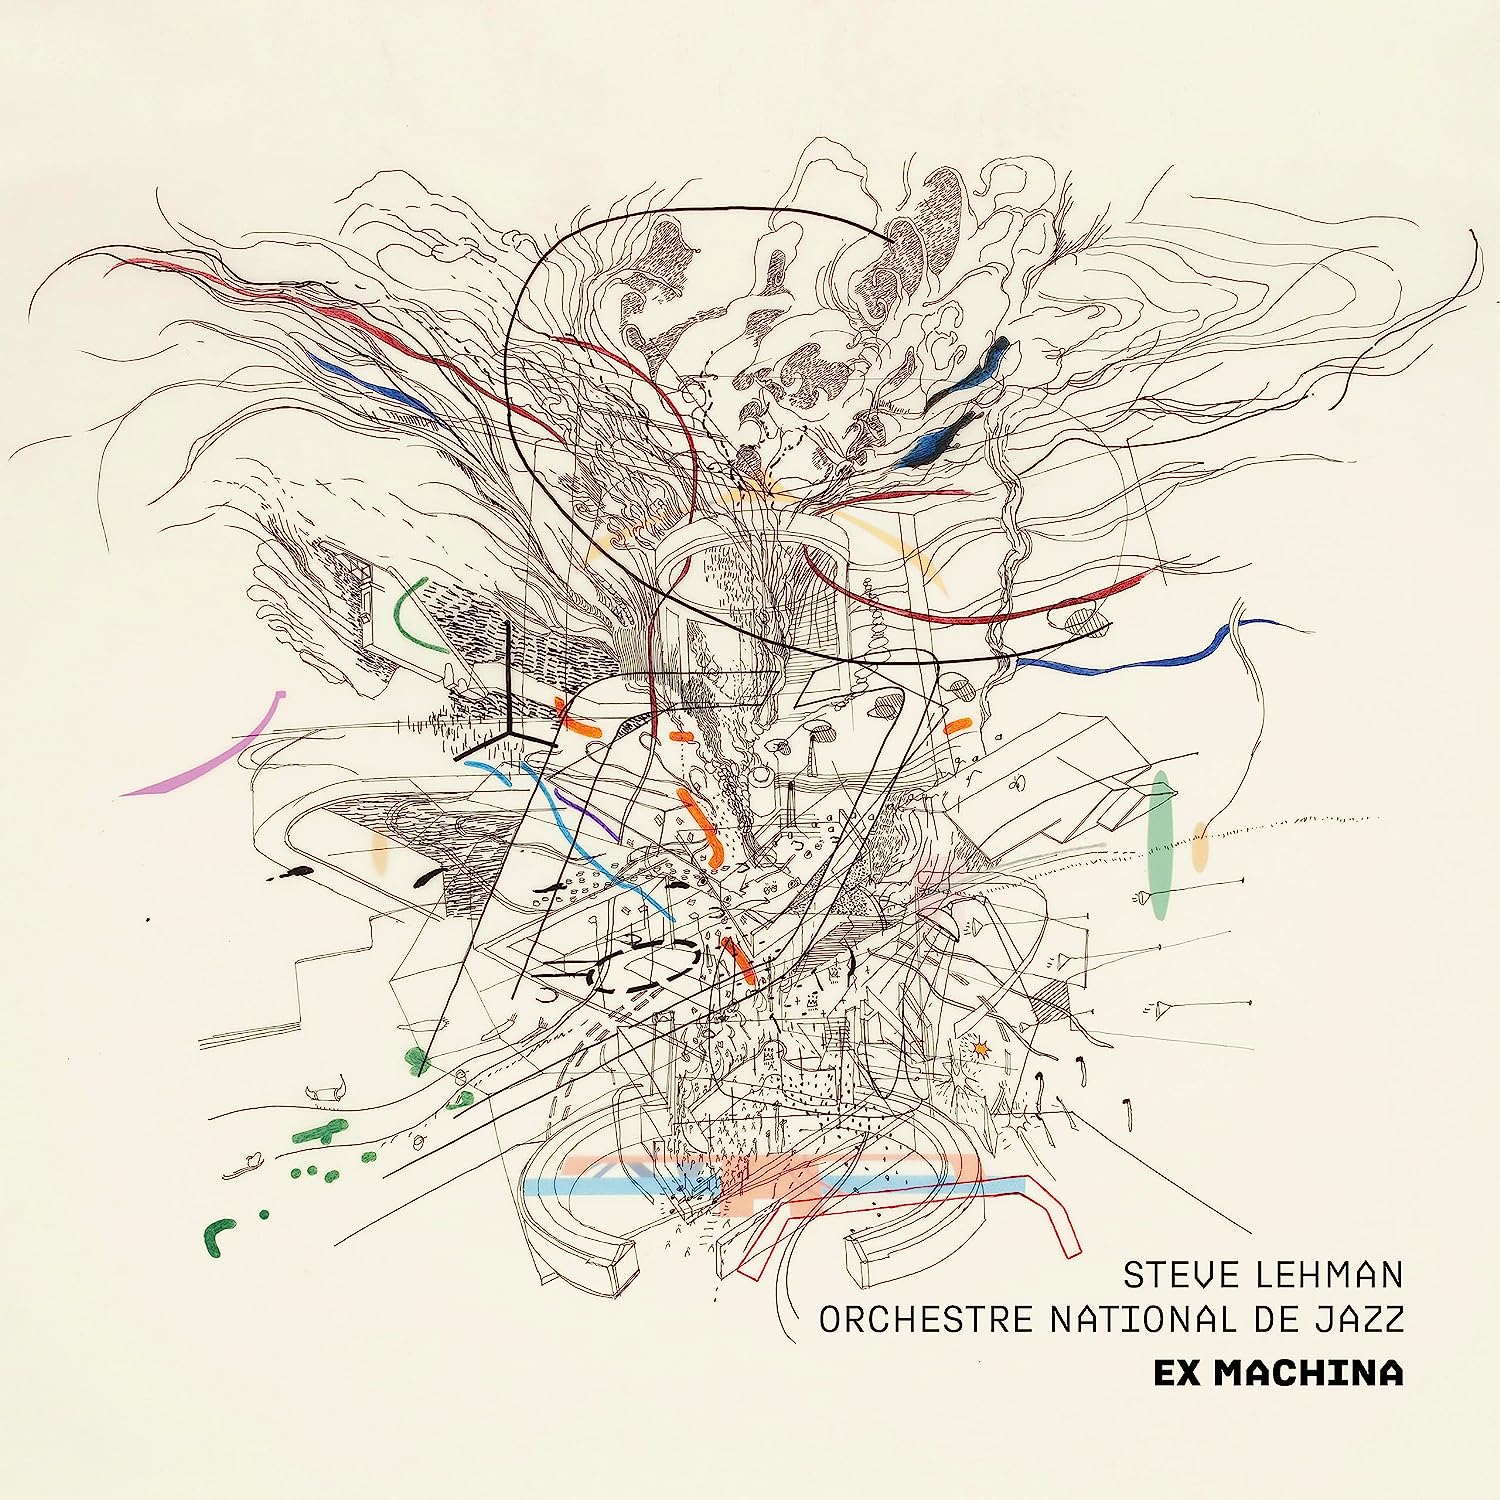 STEVE LEHMAN - Ex Machina (with Orchestre National de Jazz) cover 